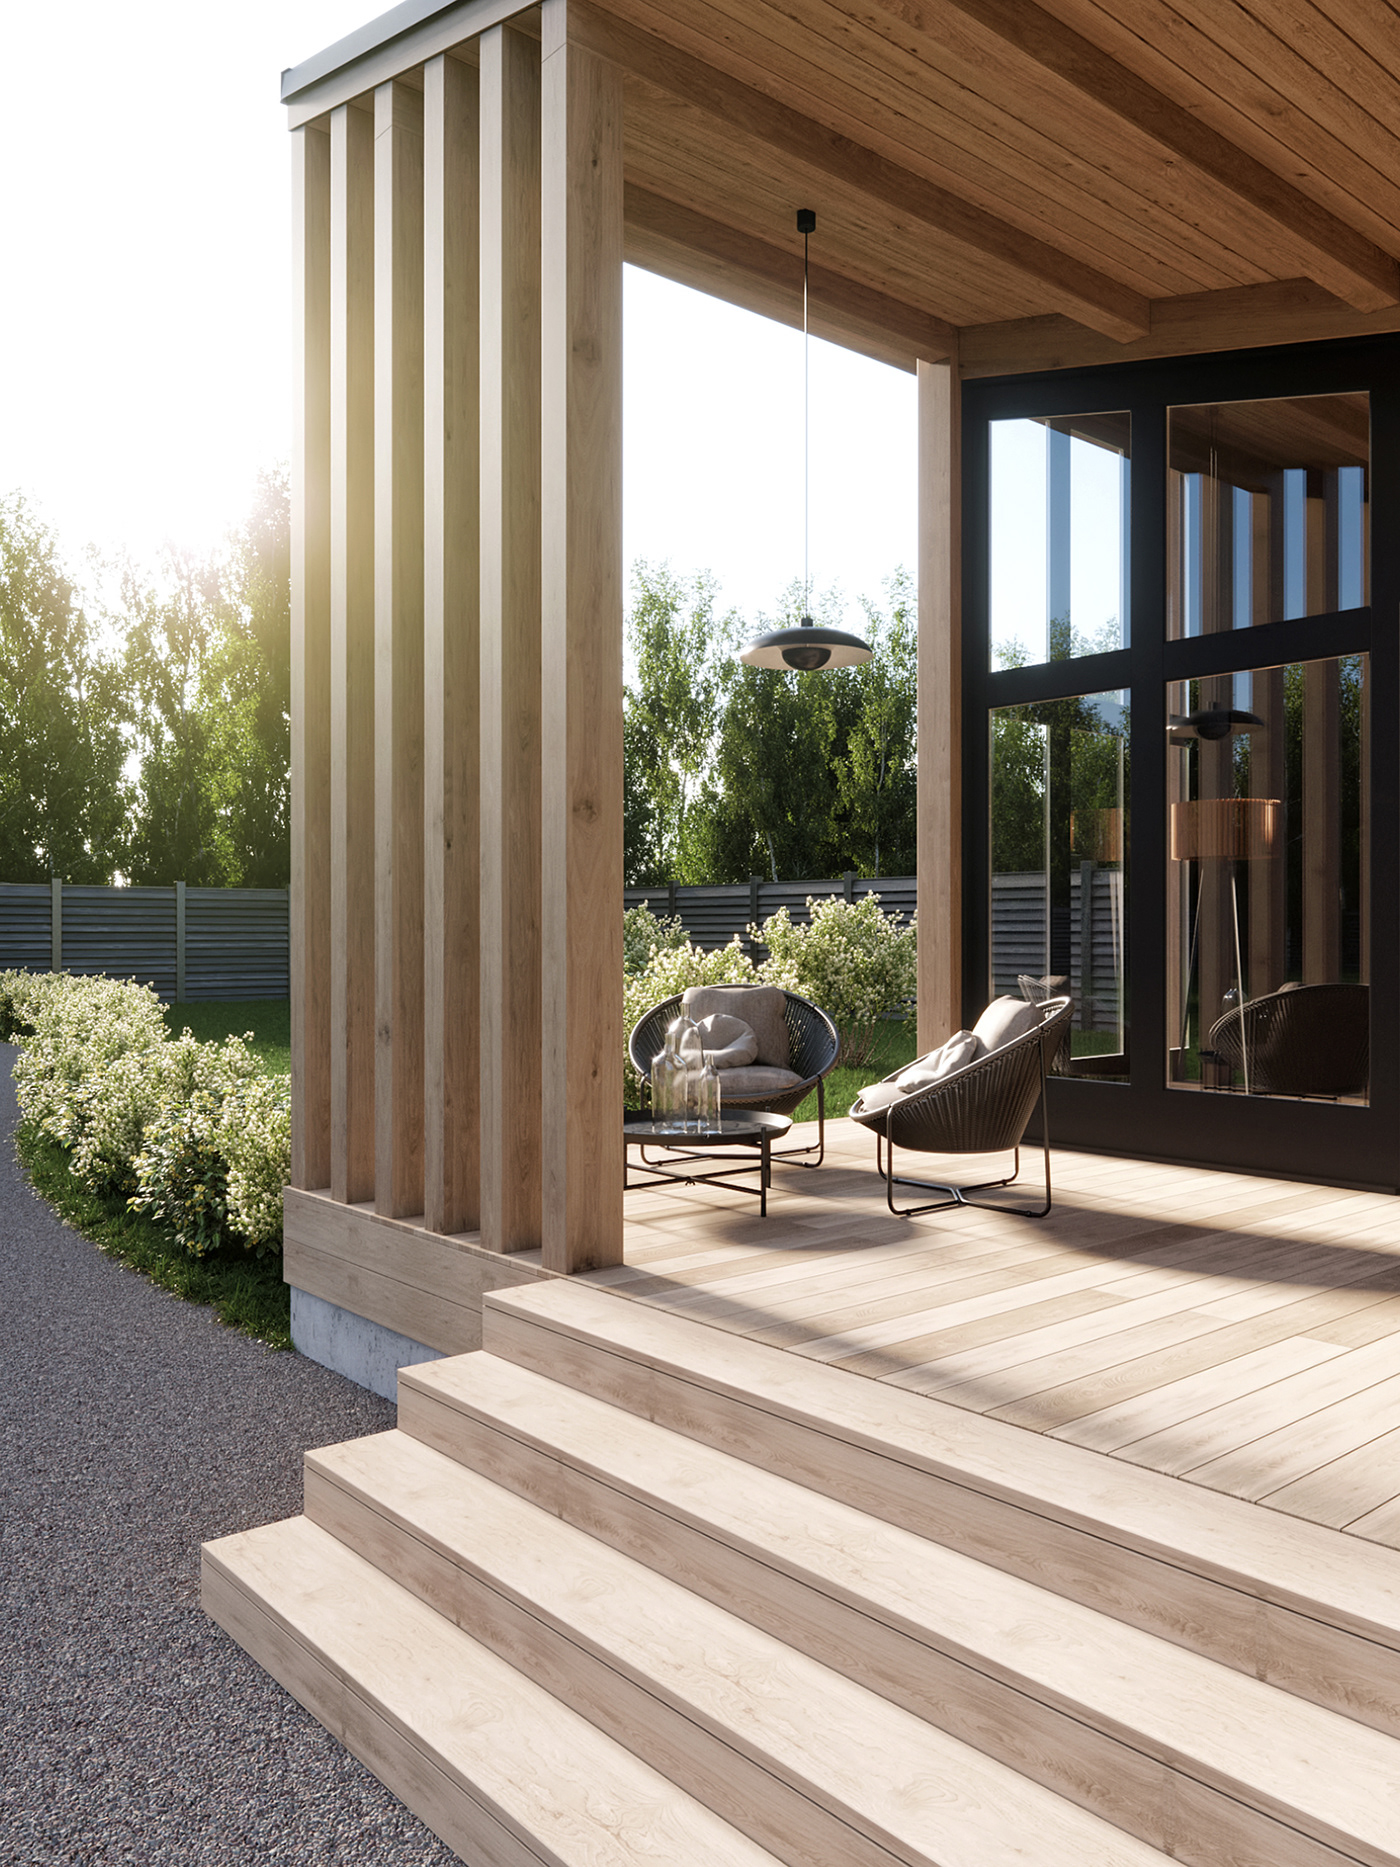 corona render  corona renderer design forest house Interior interior design  Minimalism Render woods